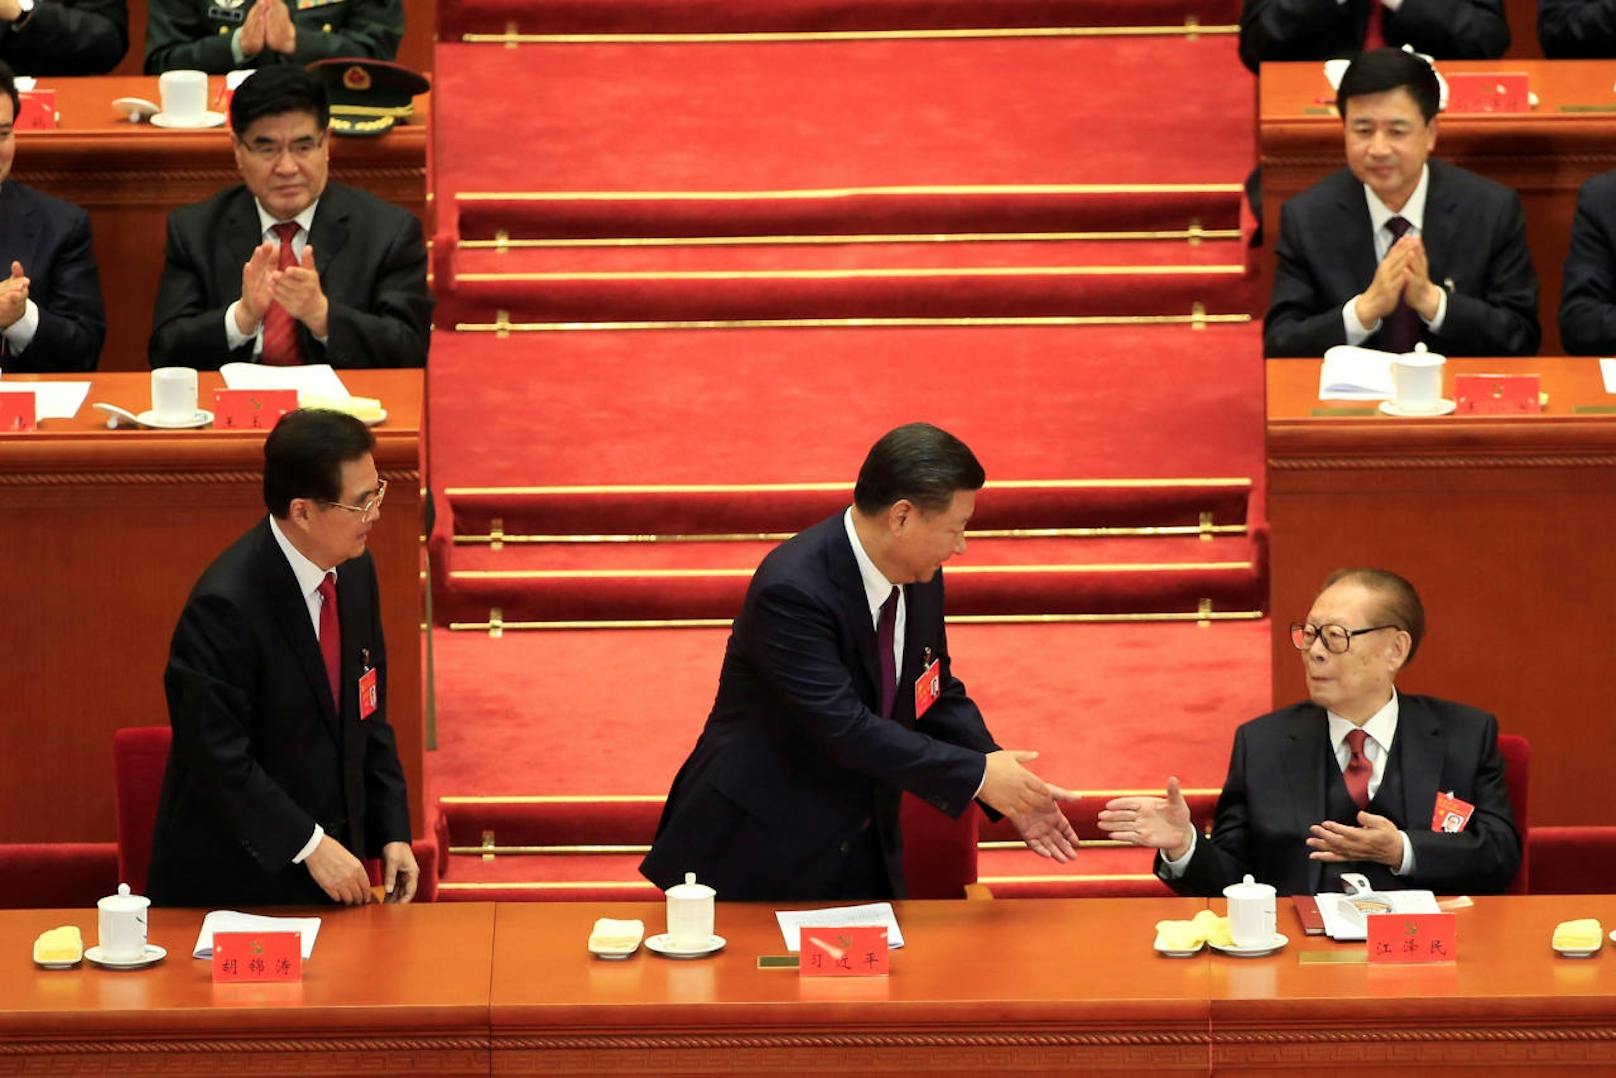 Der amtierende Präsident Xi Jinping begrüßte seinen Vorgänger ehrerbietend.